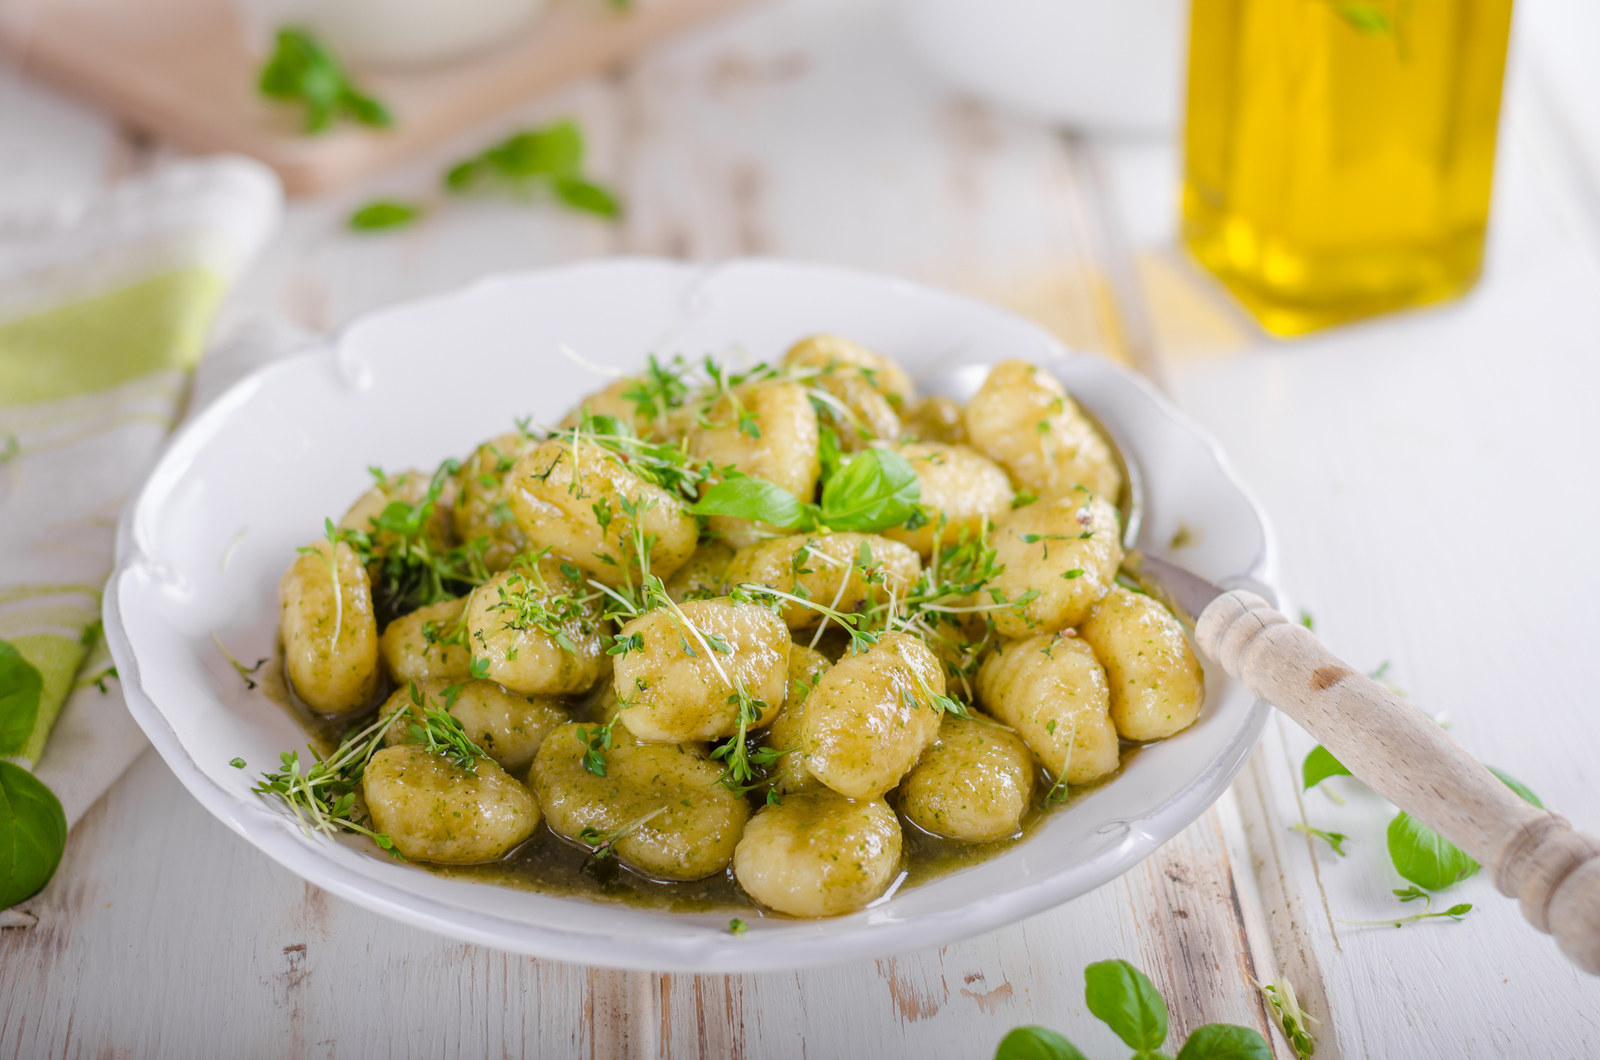 The 19 Undoubtably Best Potato-Based Foods